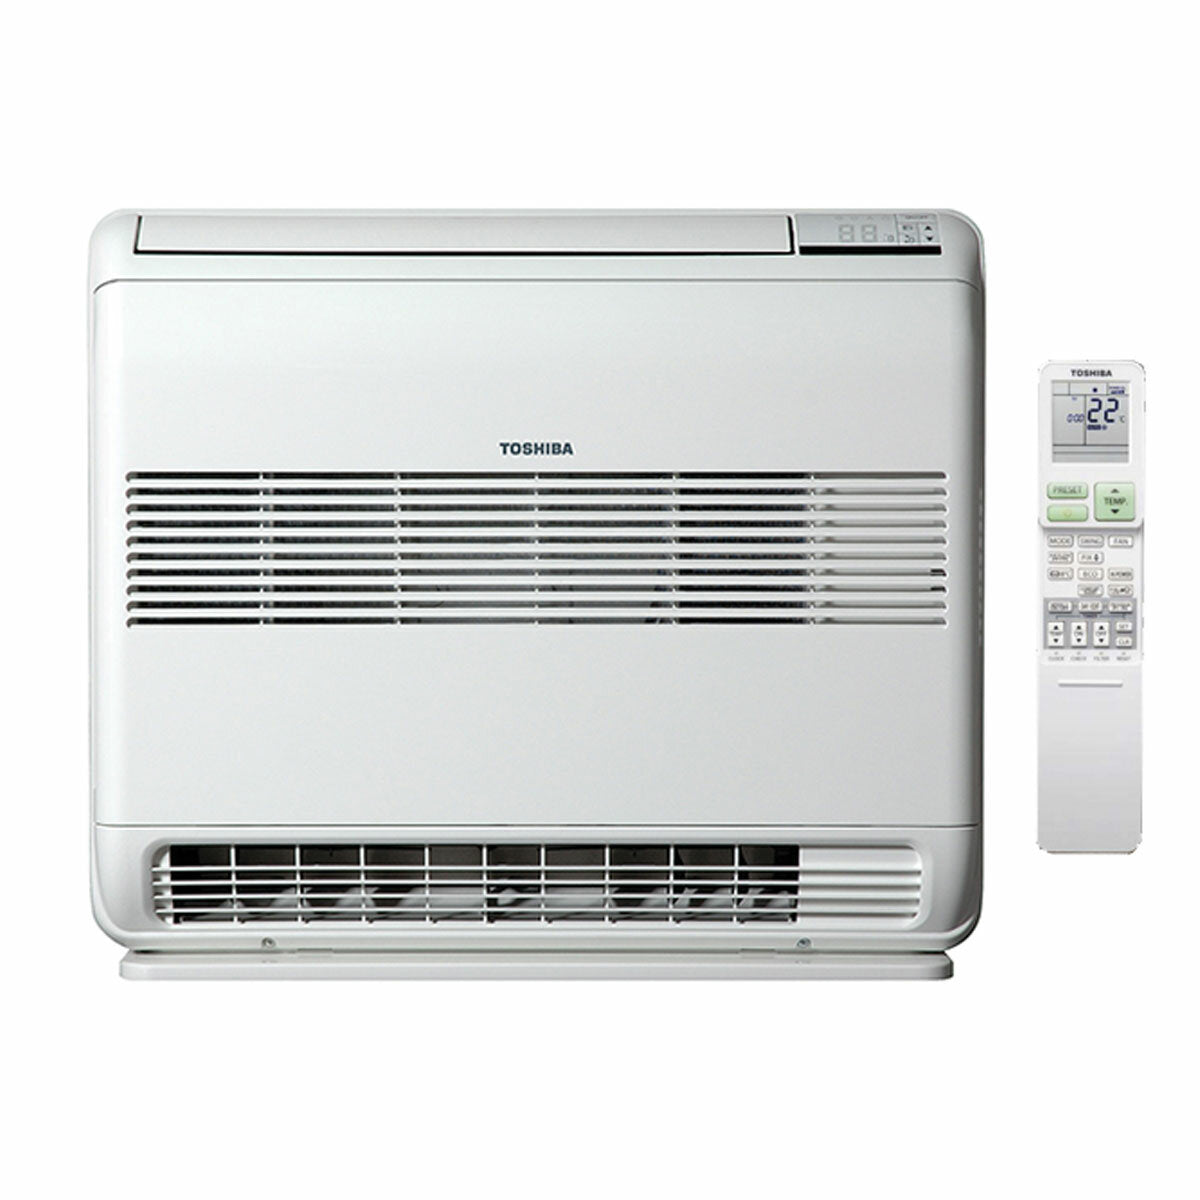 Toshiba Console J2 dual split air conditioner 9000 + 12000 BTU inverter A ++ outdoor unit 4.0 kW